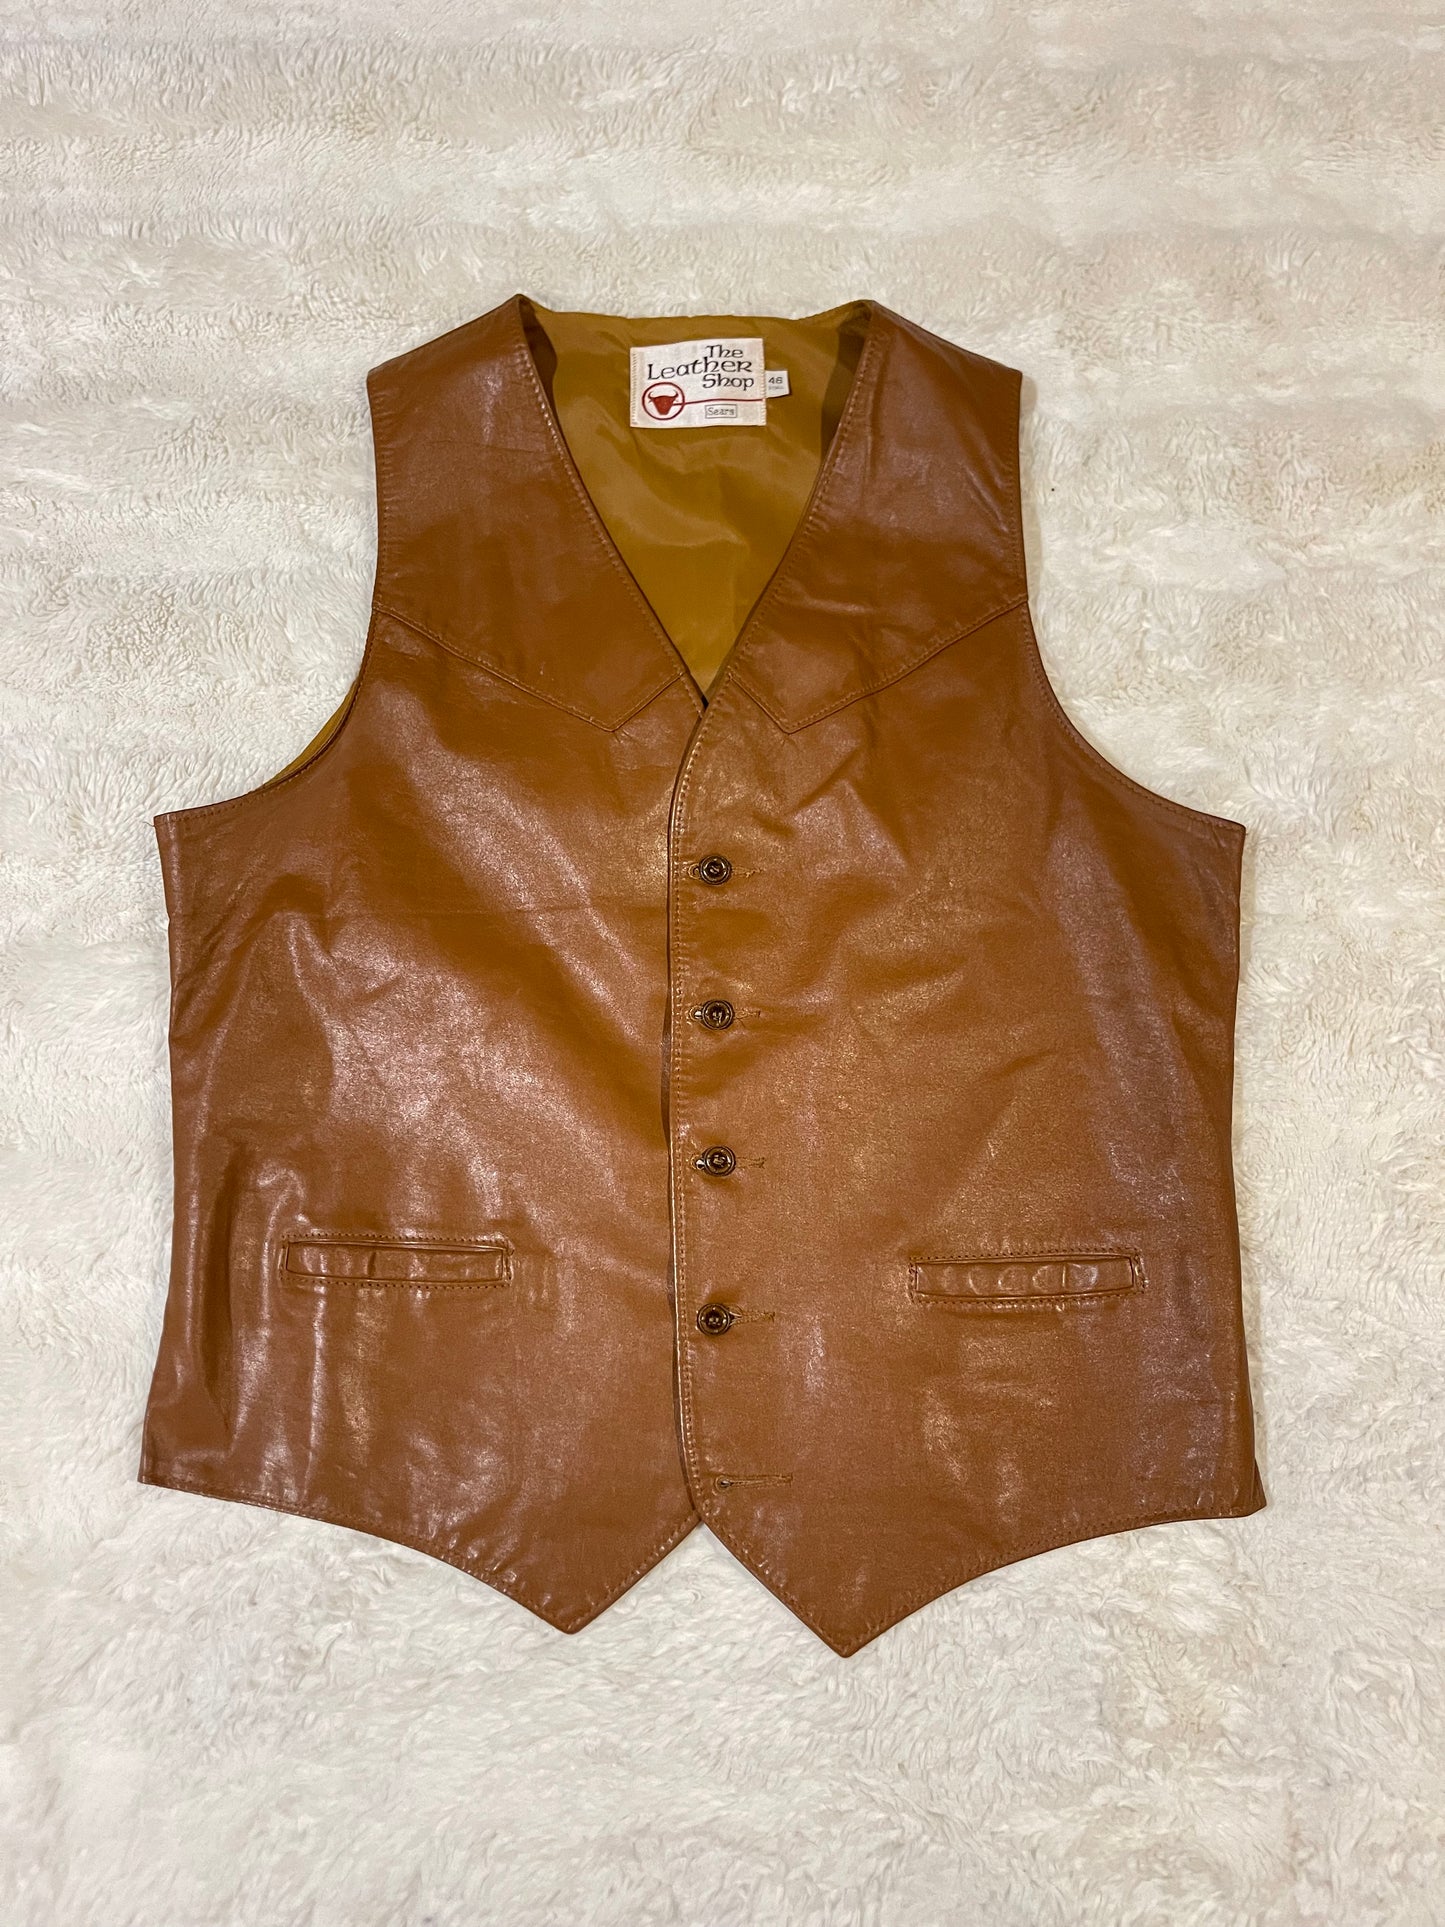 70s Sears Genuine Leather Vest (L)